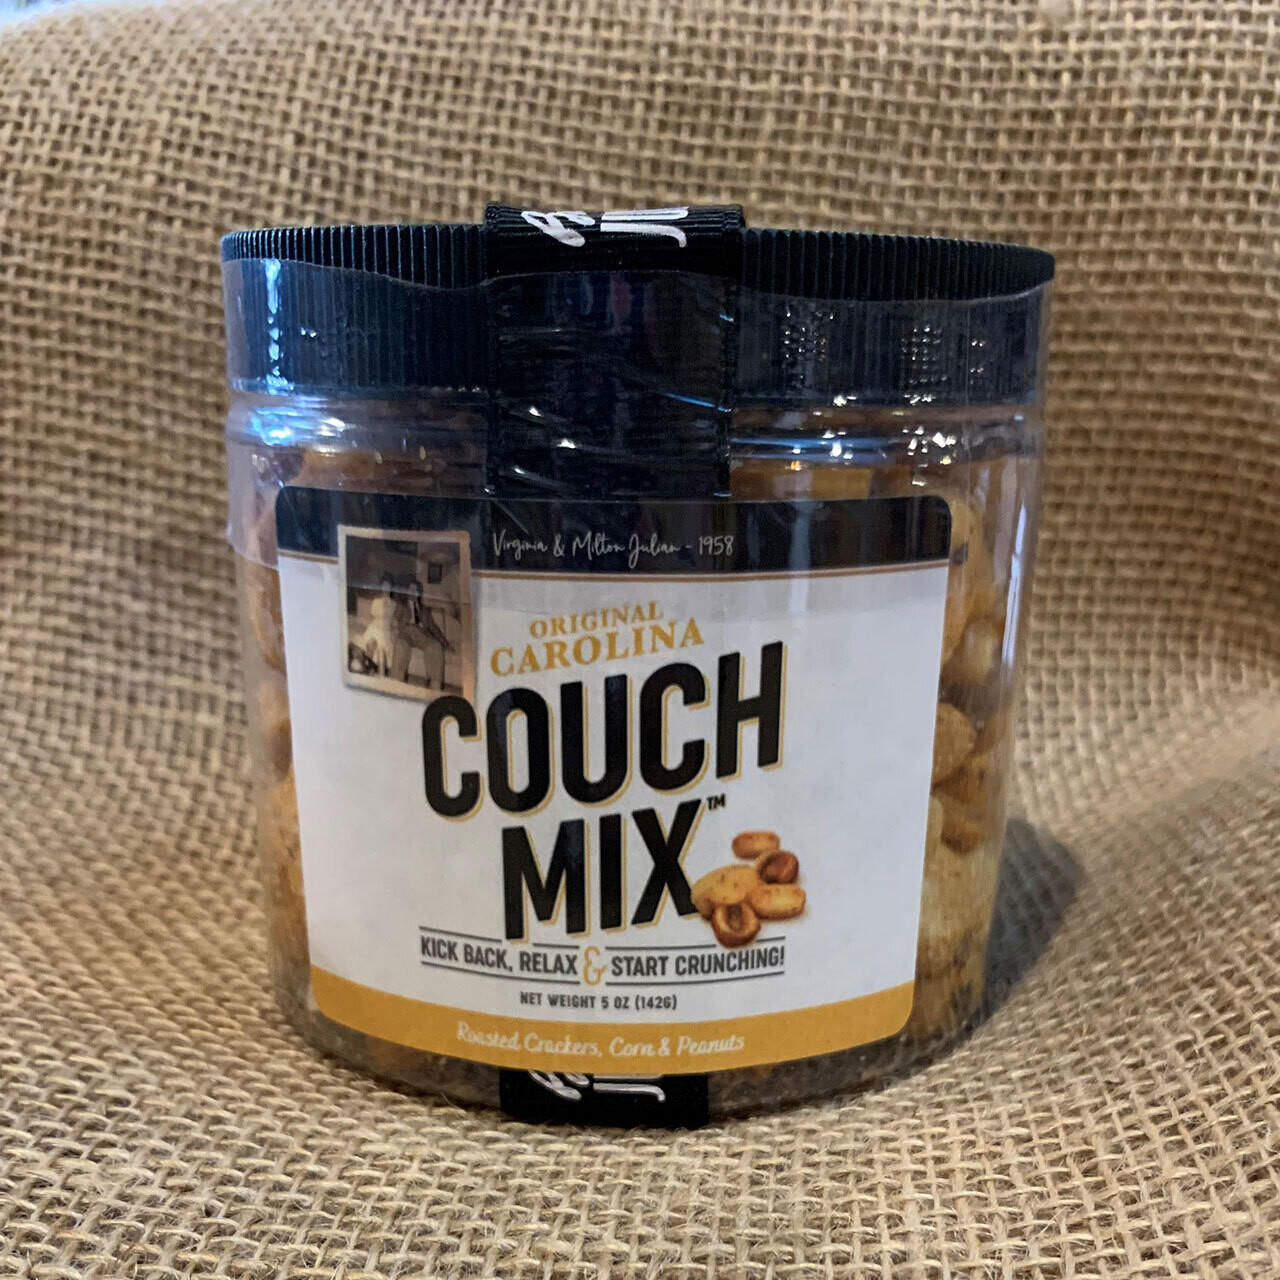 Couch Mix 5-oz jar